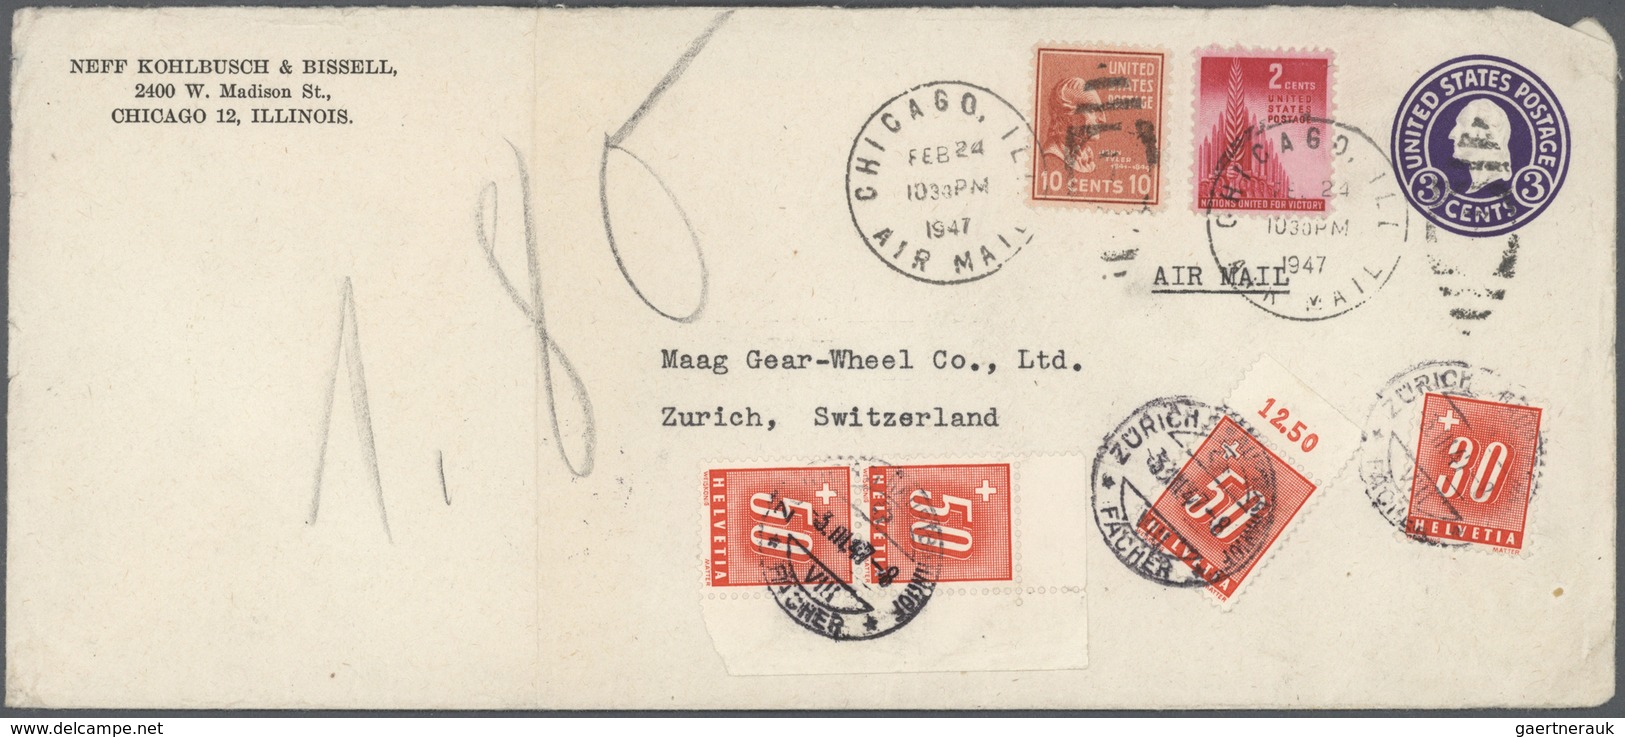 GA Schweiz - Portomarken: 1947 Insuffiently Franked US Postal Stationery Envelope 3c. Uprated 10c And 3 - Taxe